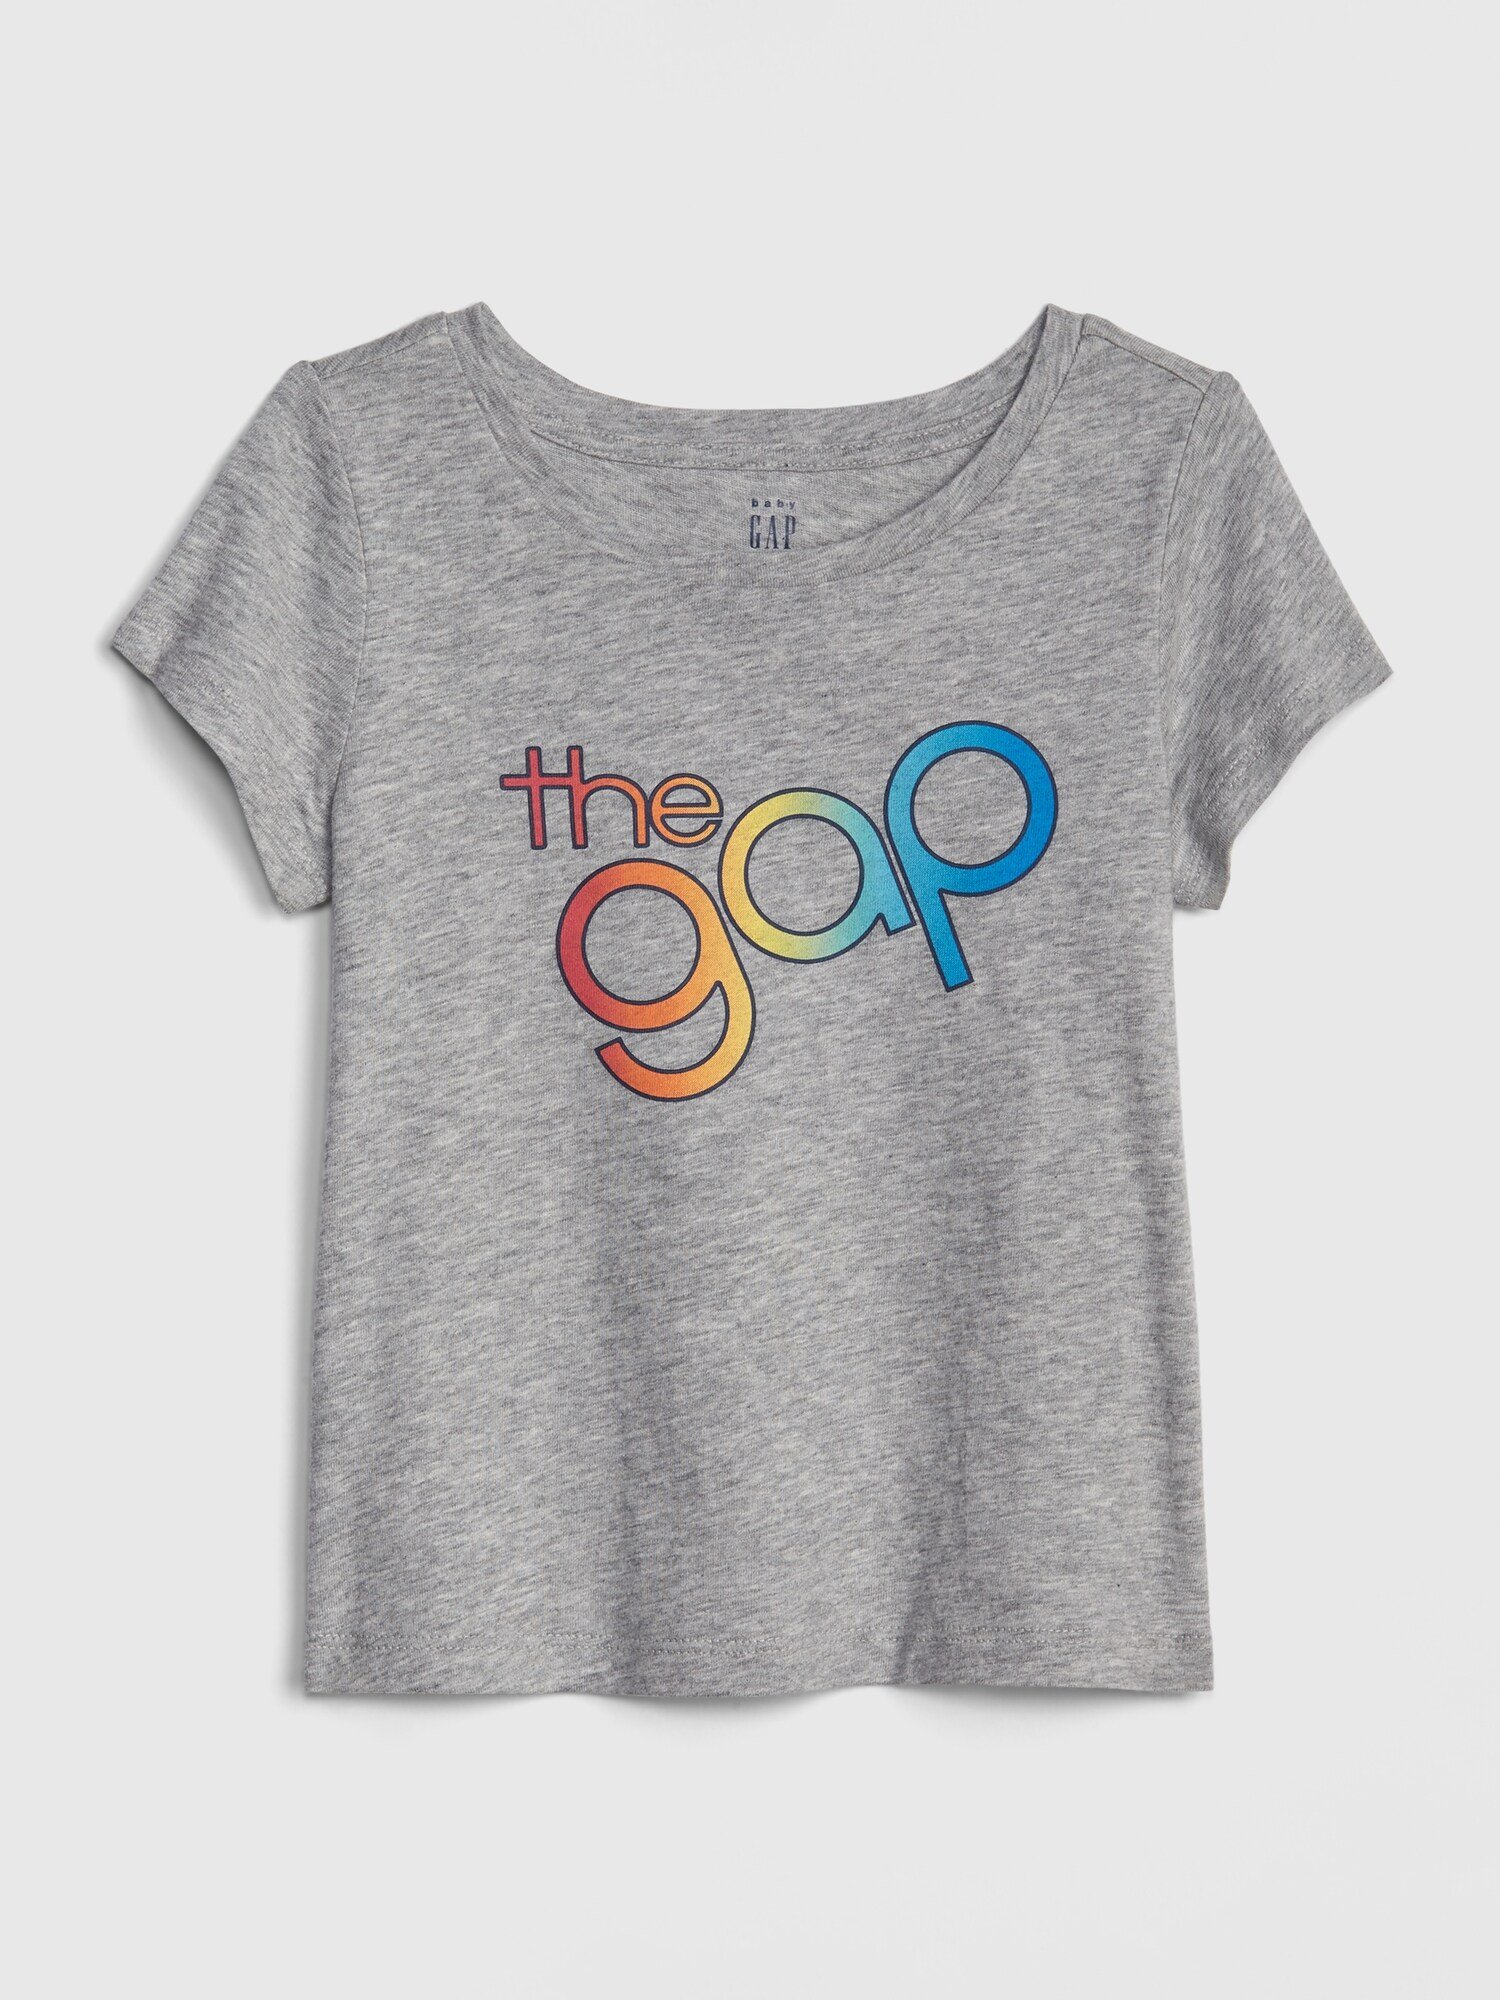 Kız Bebek Gap Logo Kısa Kollu T-Shirt product image